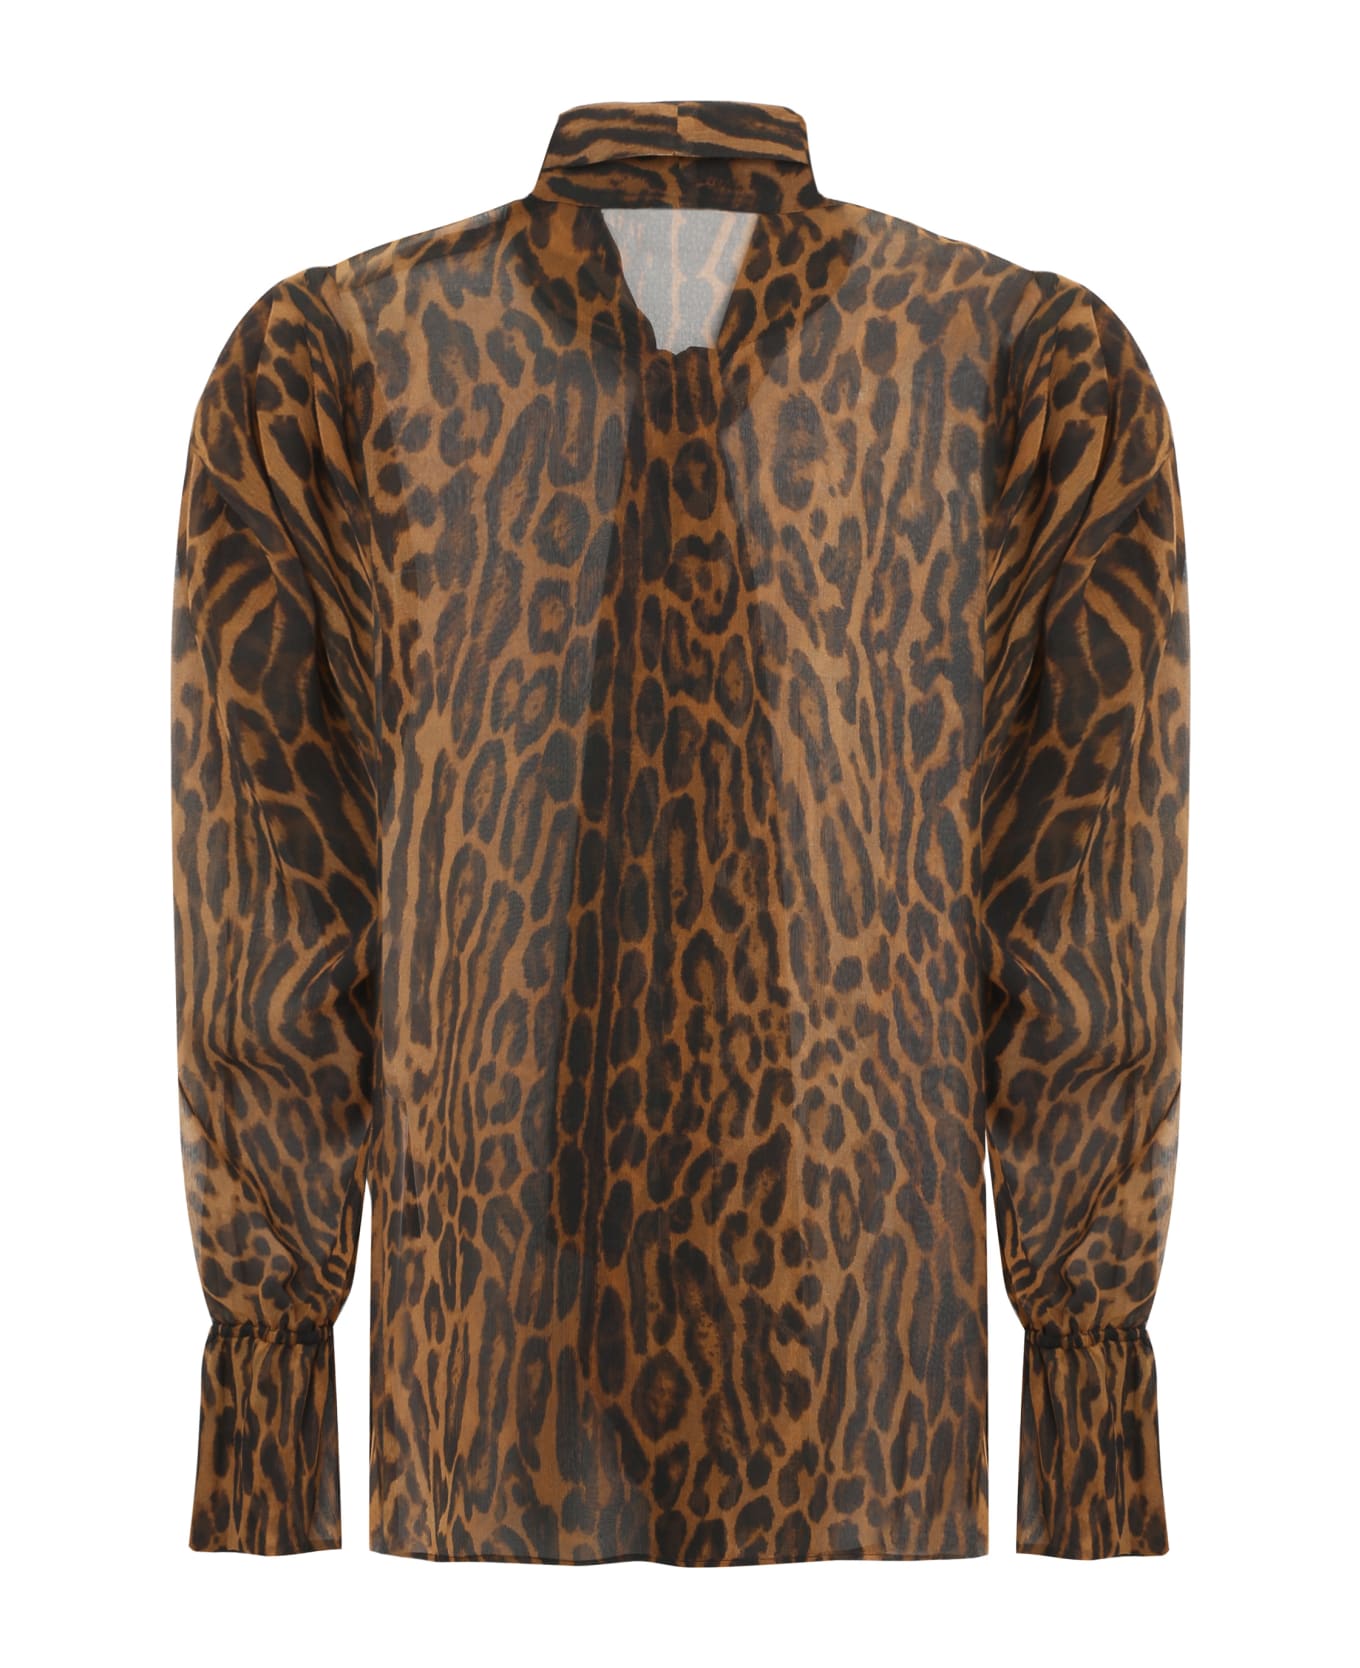 Nina Ricci Printed Silk Shirt - Leopard ブラウス